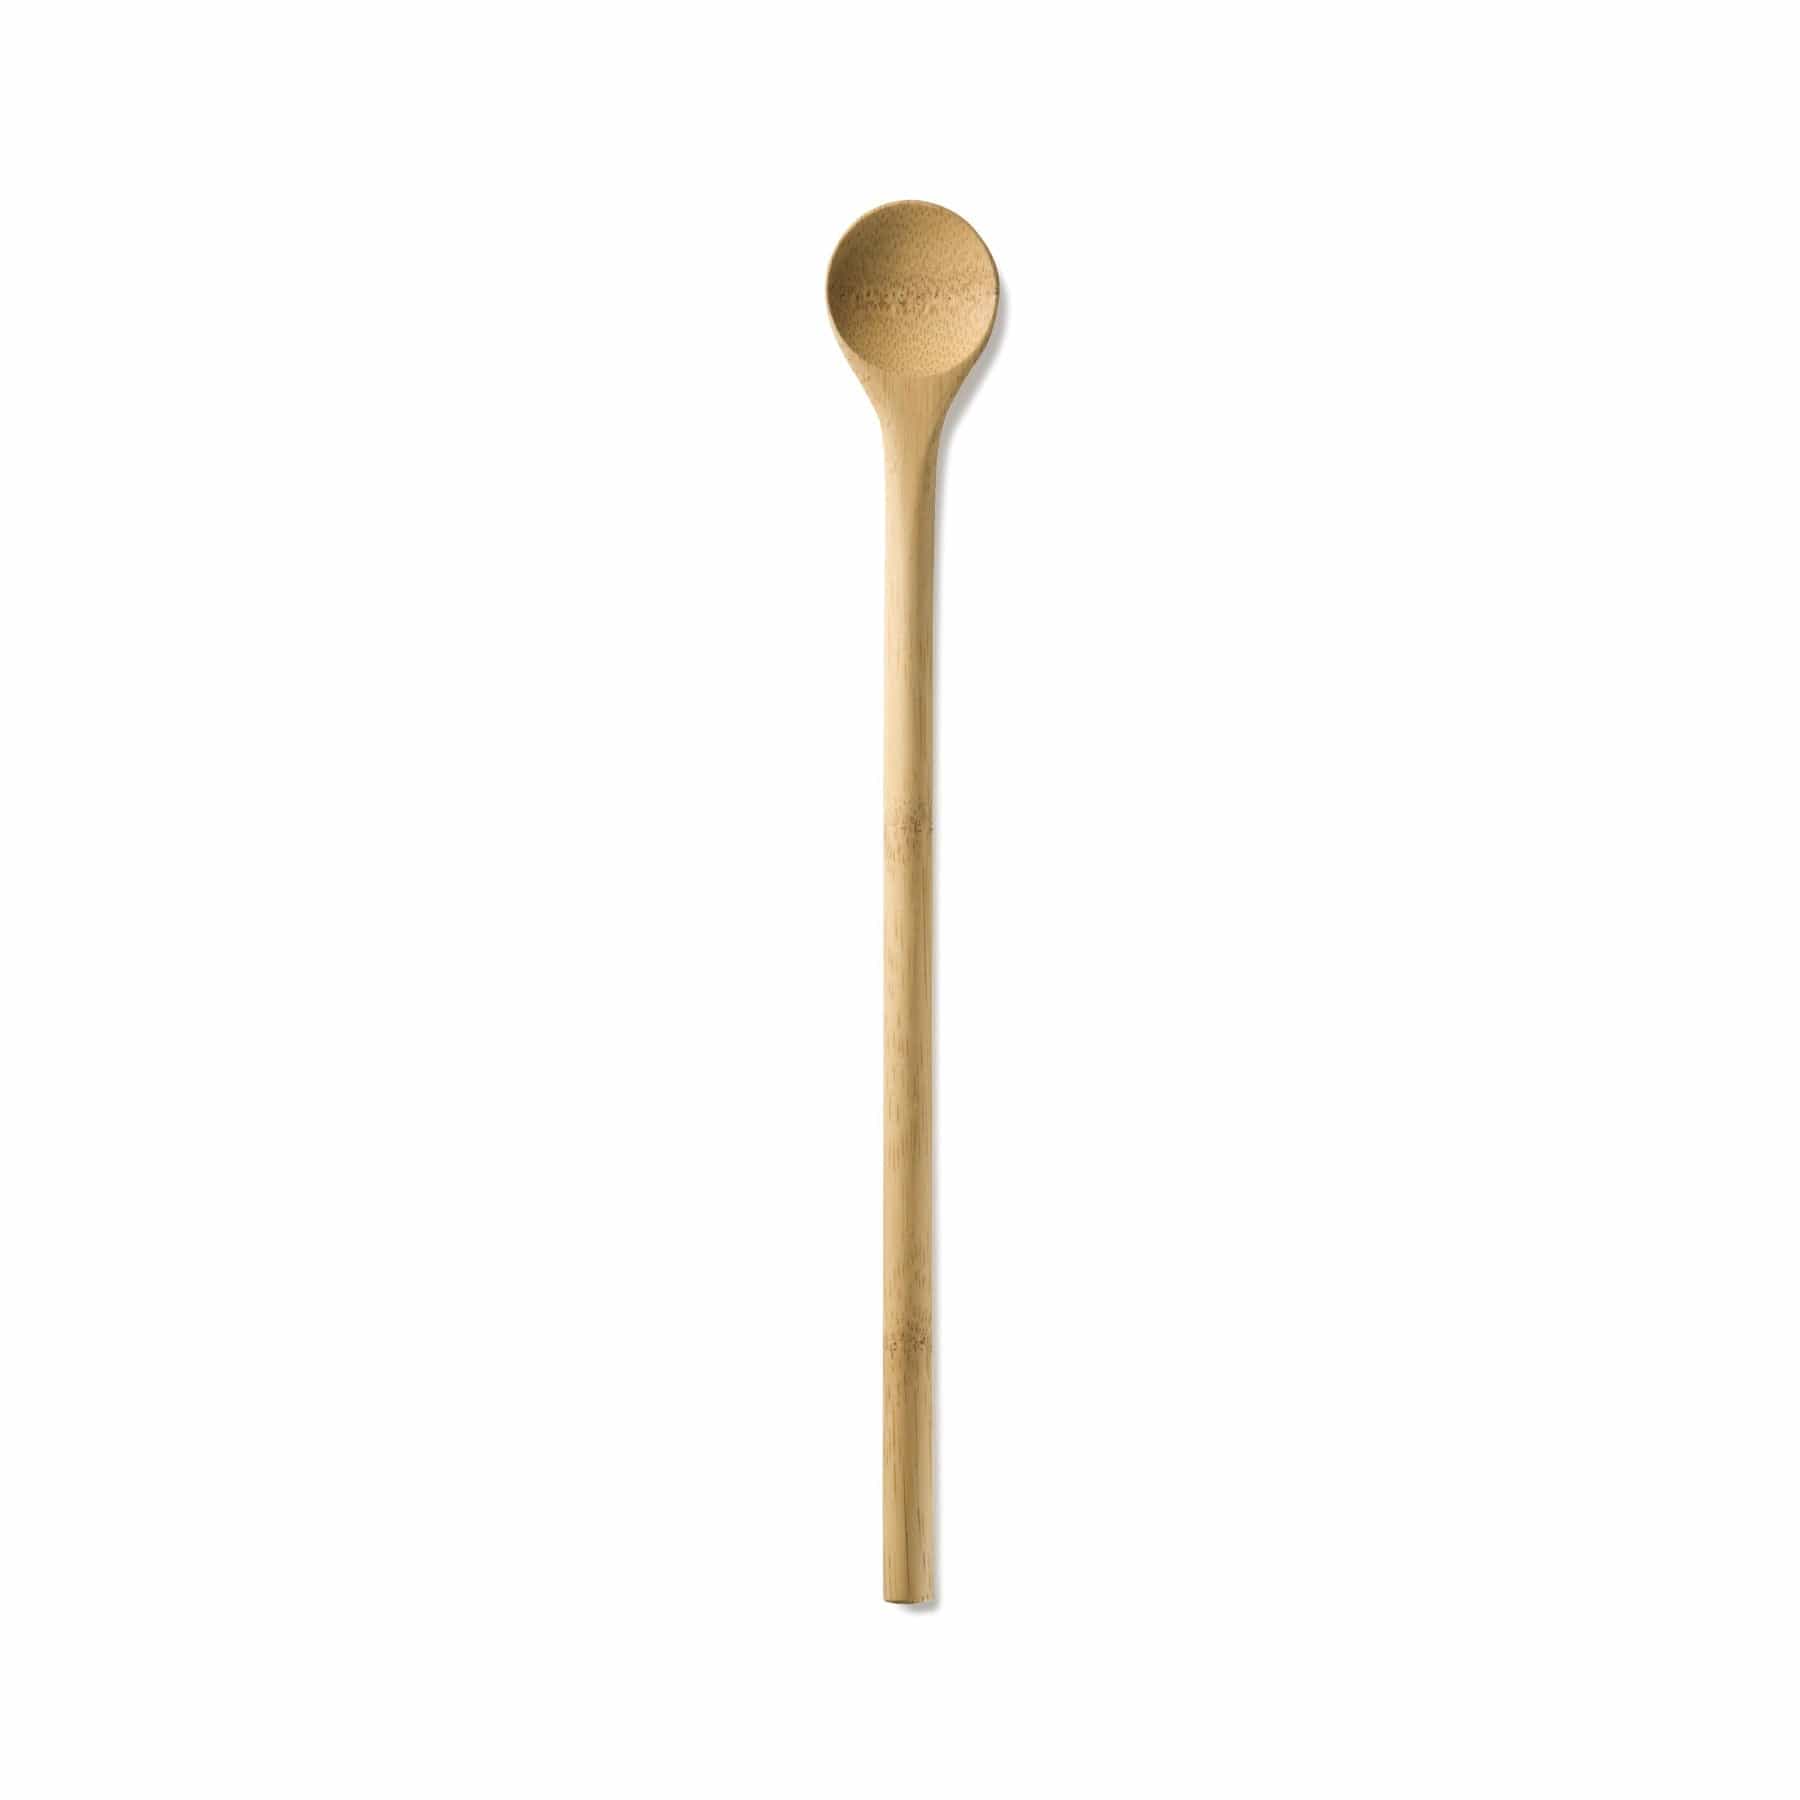 Bamboo tasting spoon